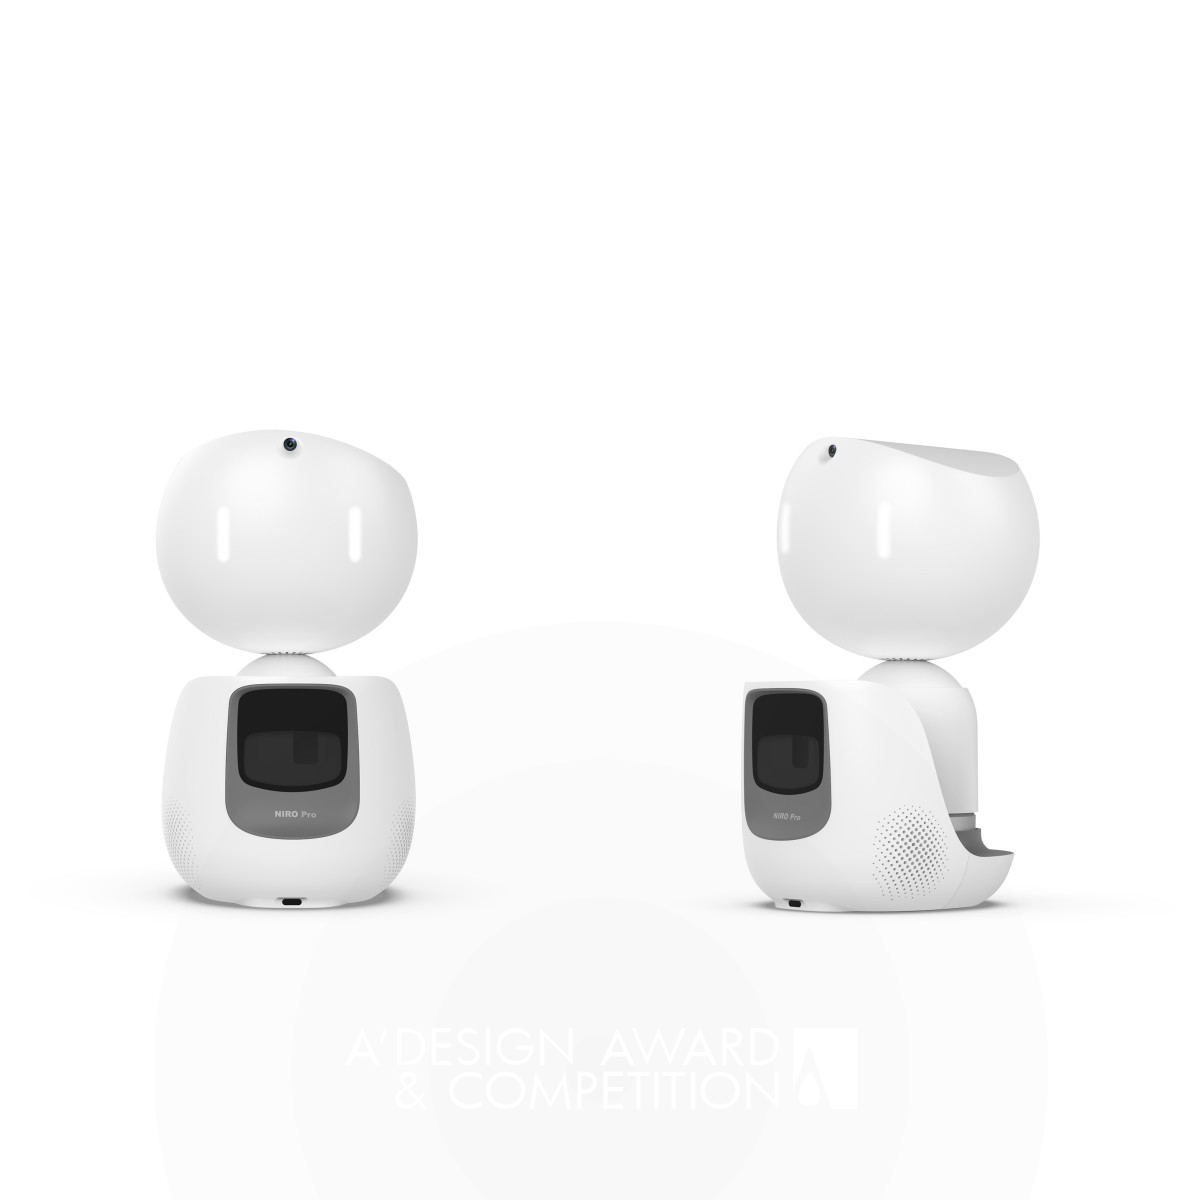 NIRO Pro Interactive Robot by Yang Fan